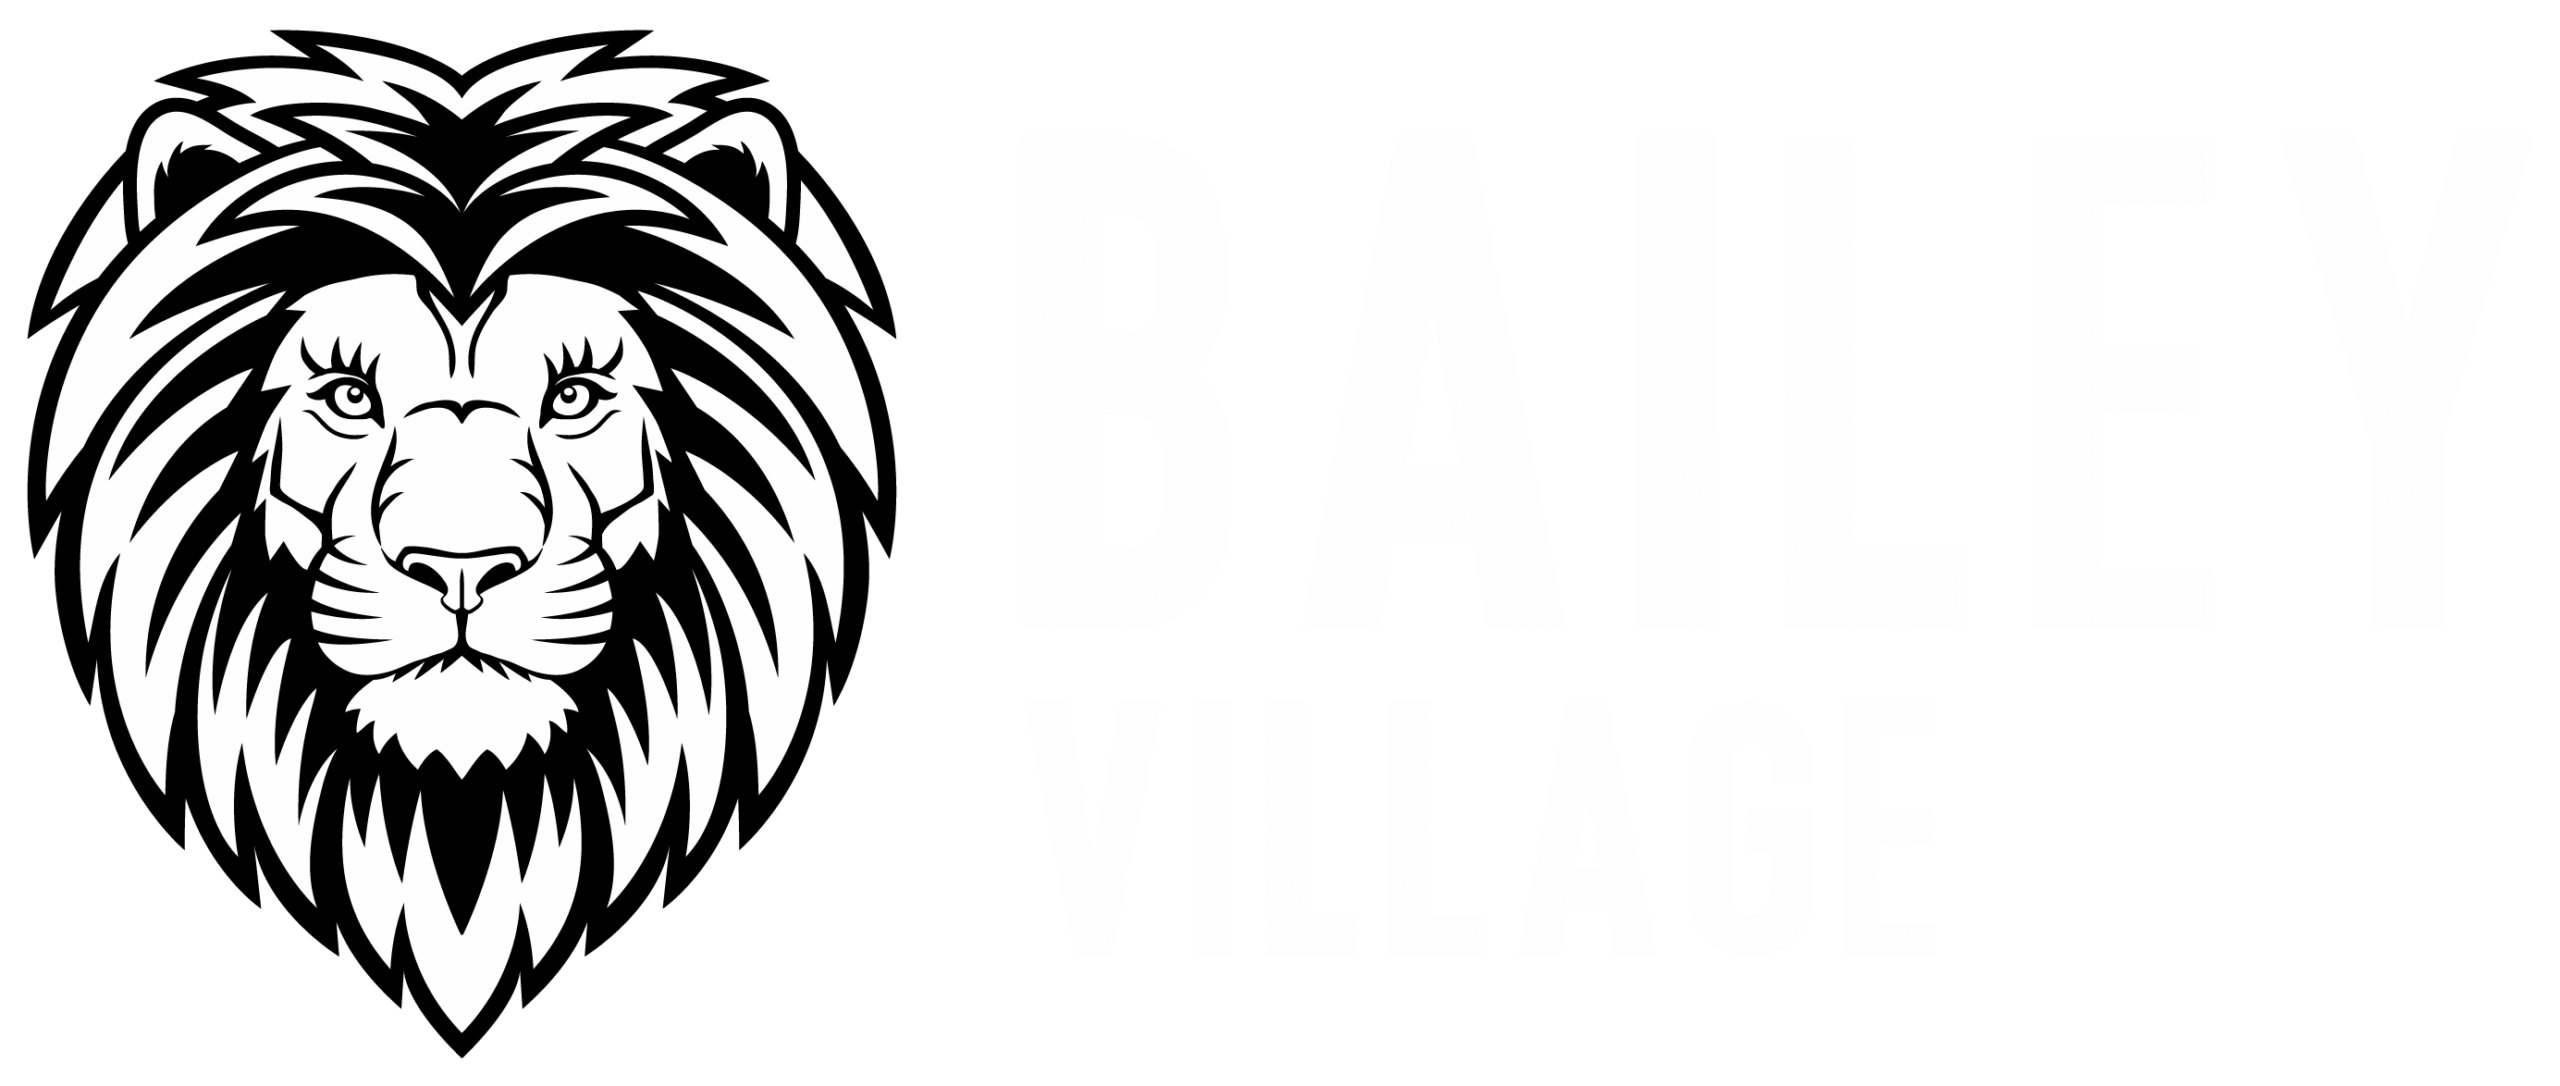 Bailey Village - footer logo